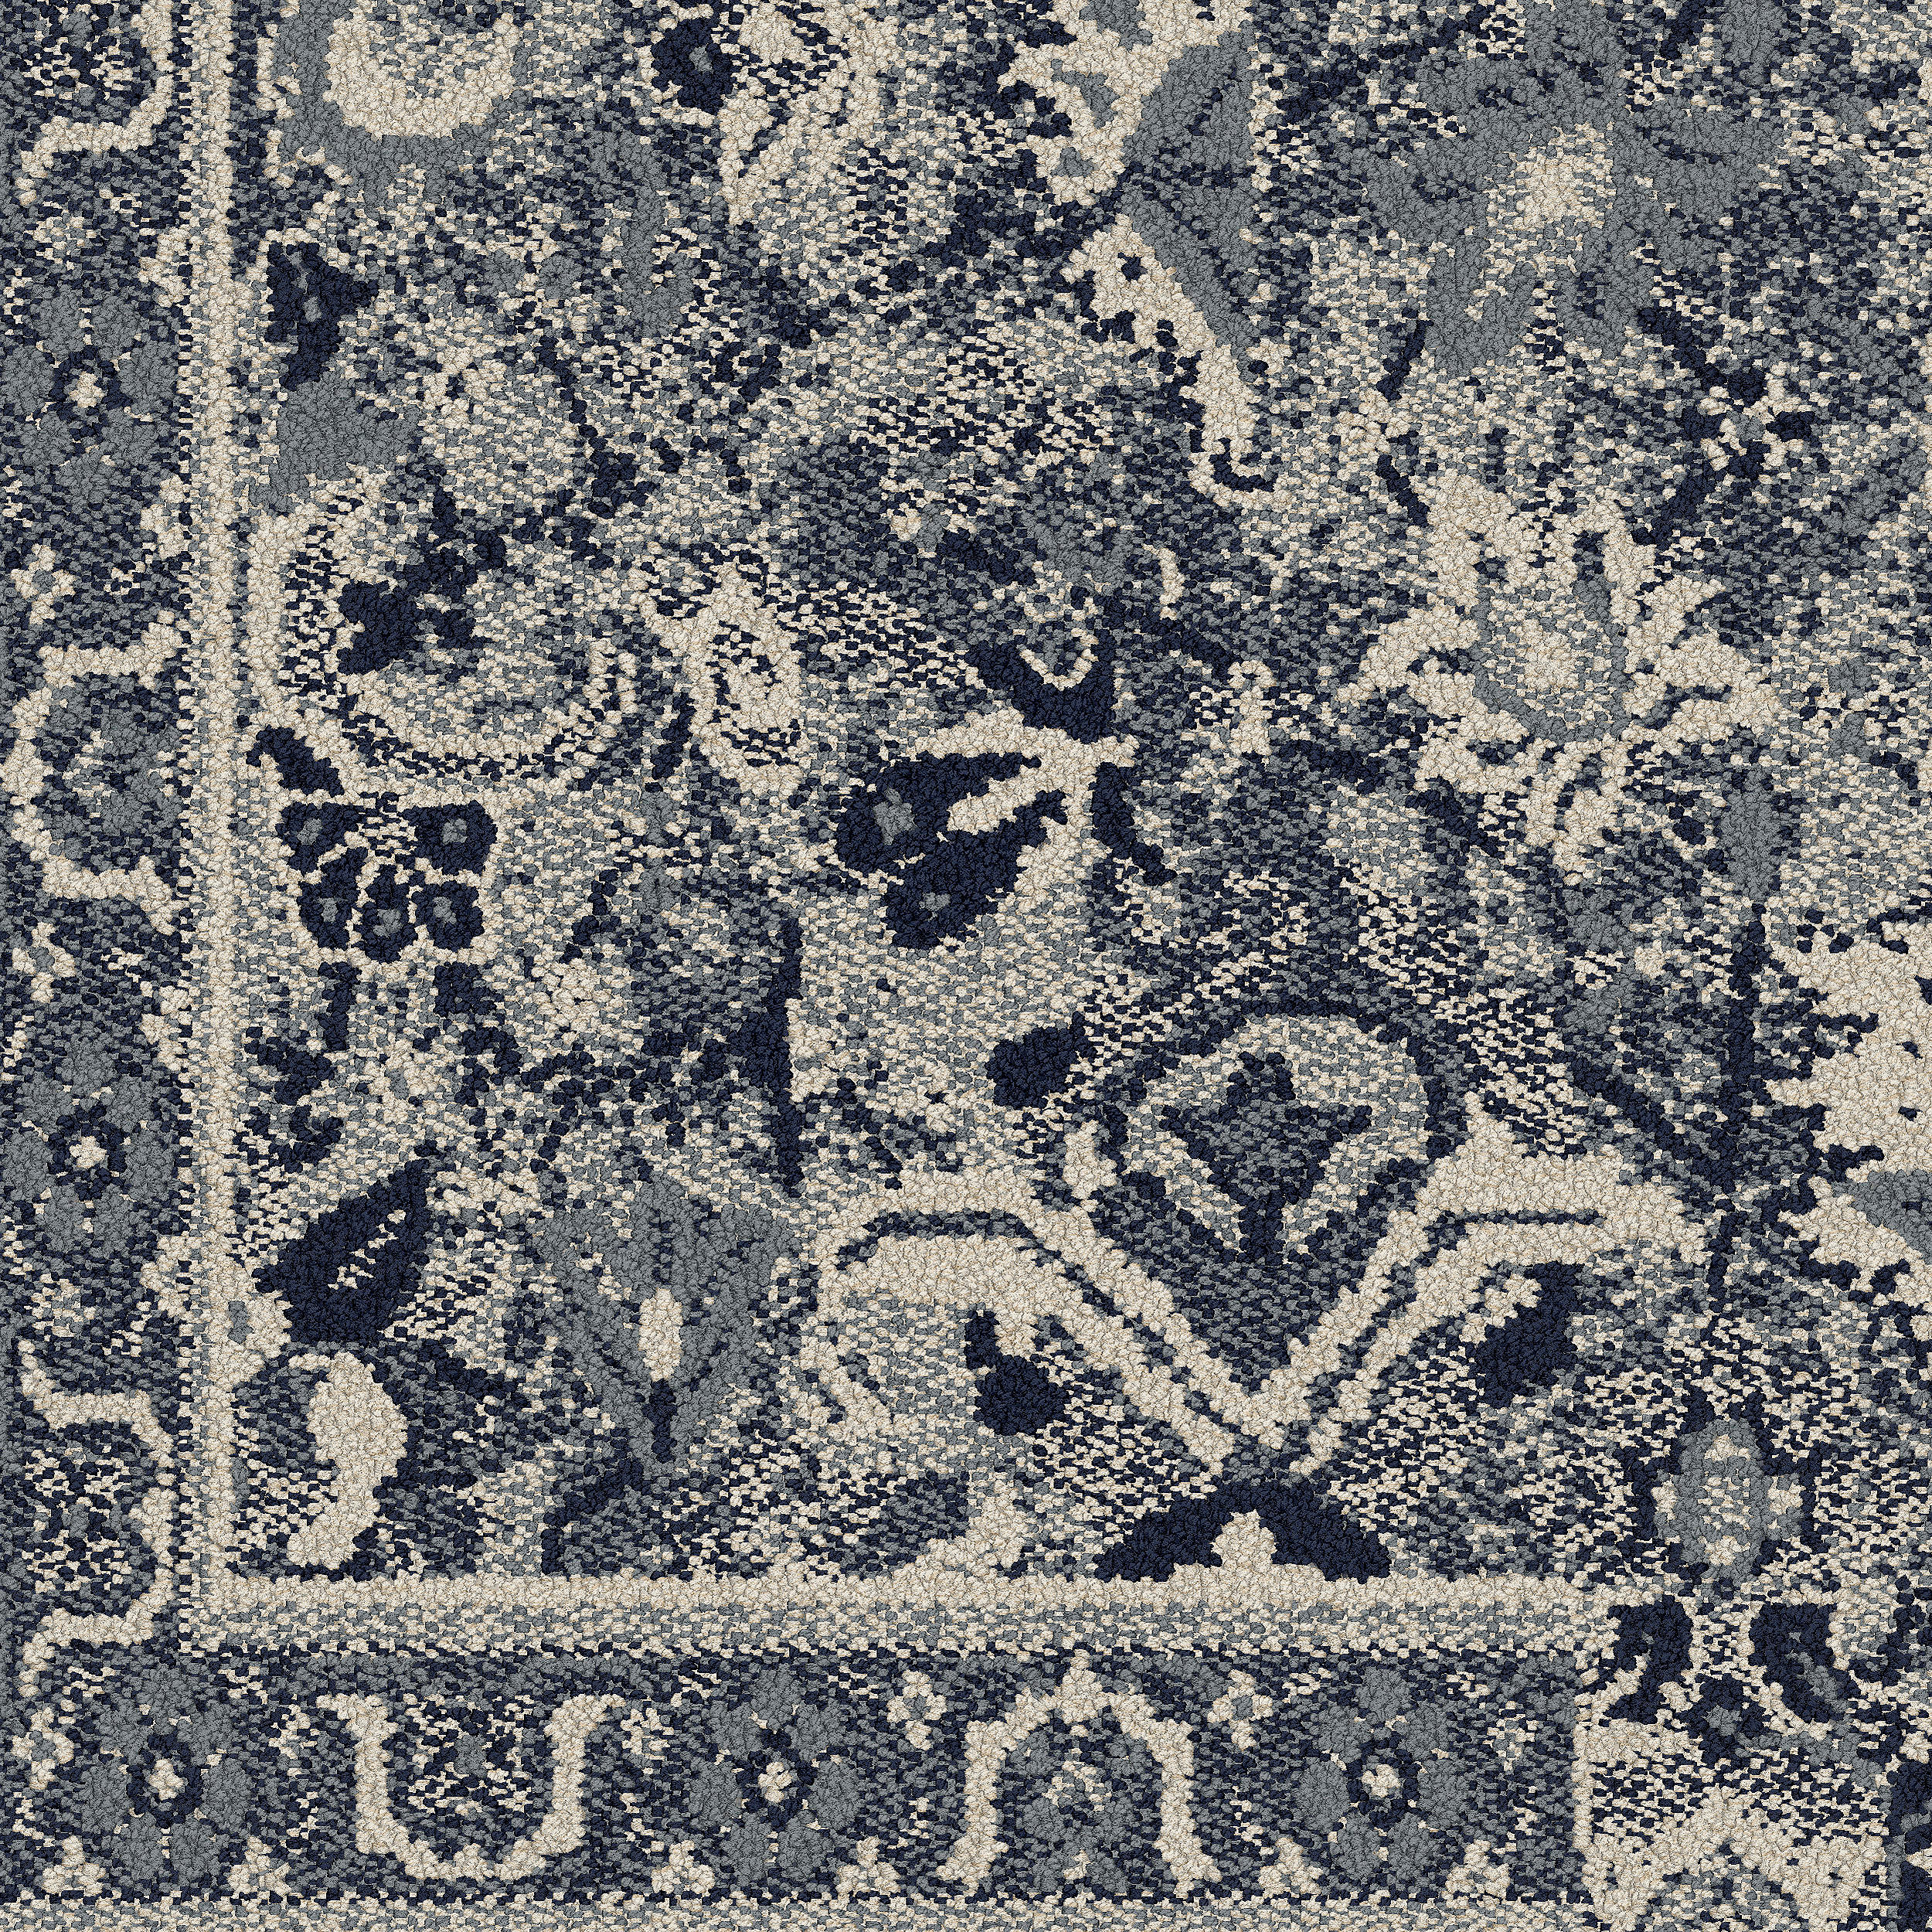 Cheshire Street carpet tile in Cobalt número de imagen 5